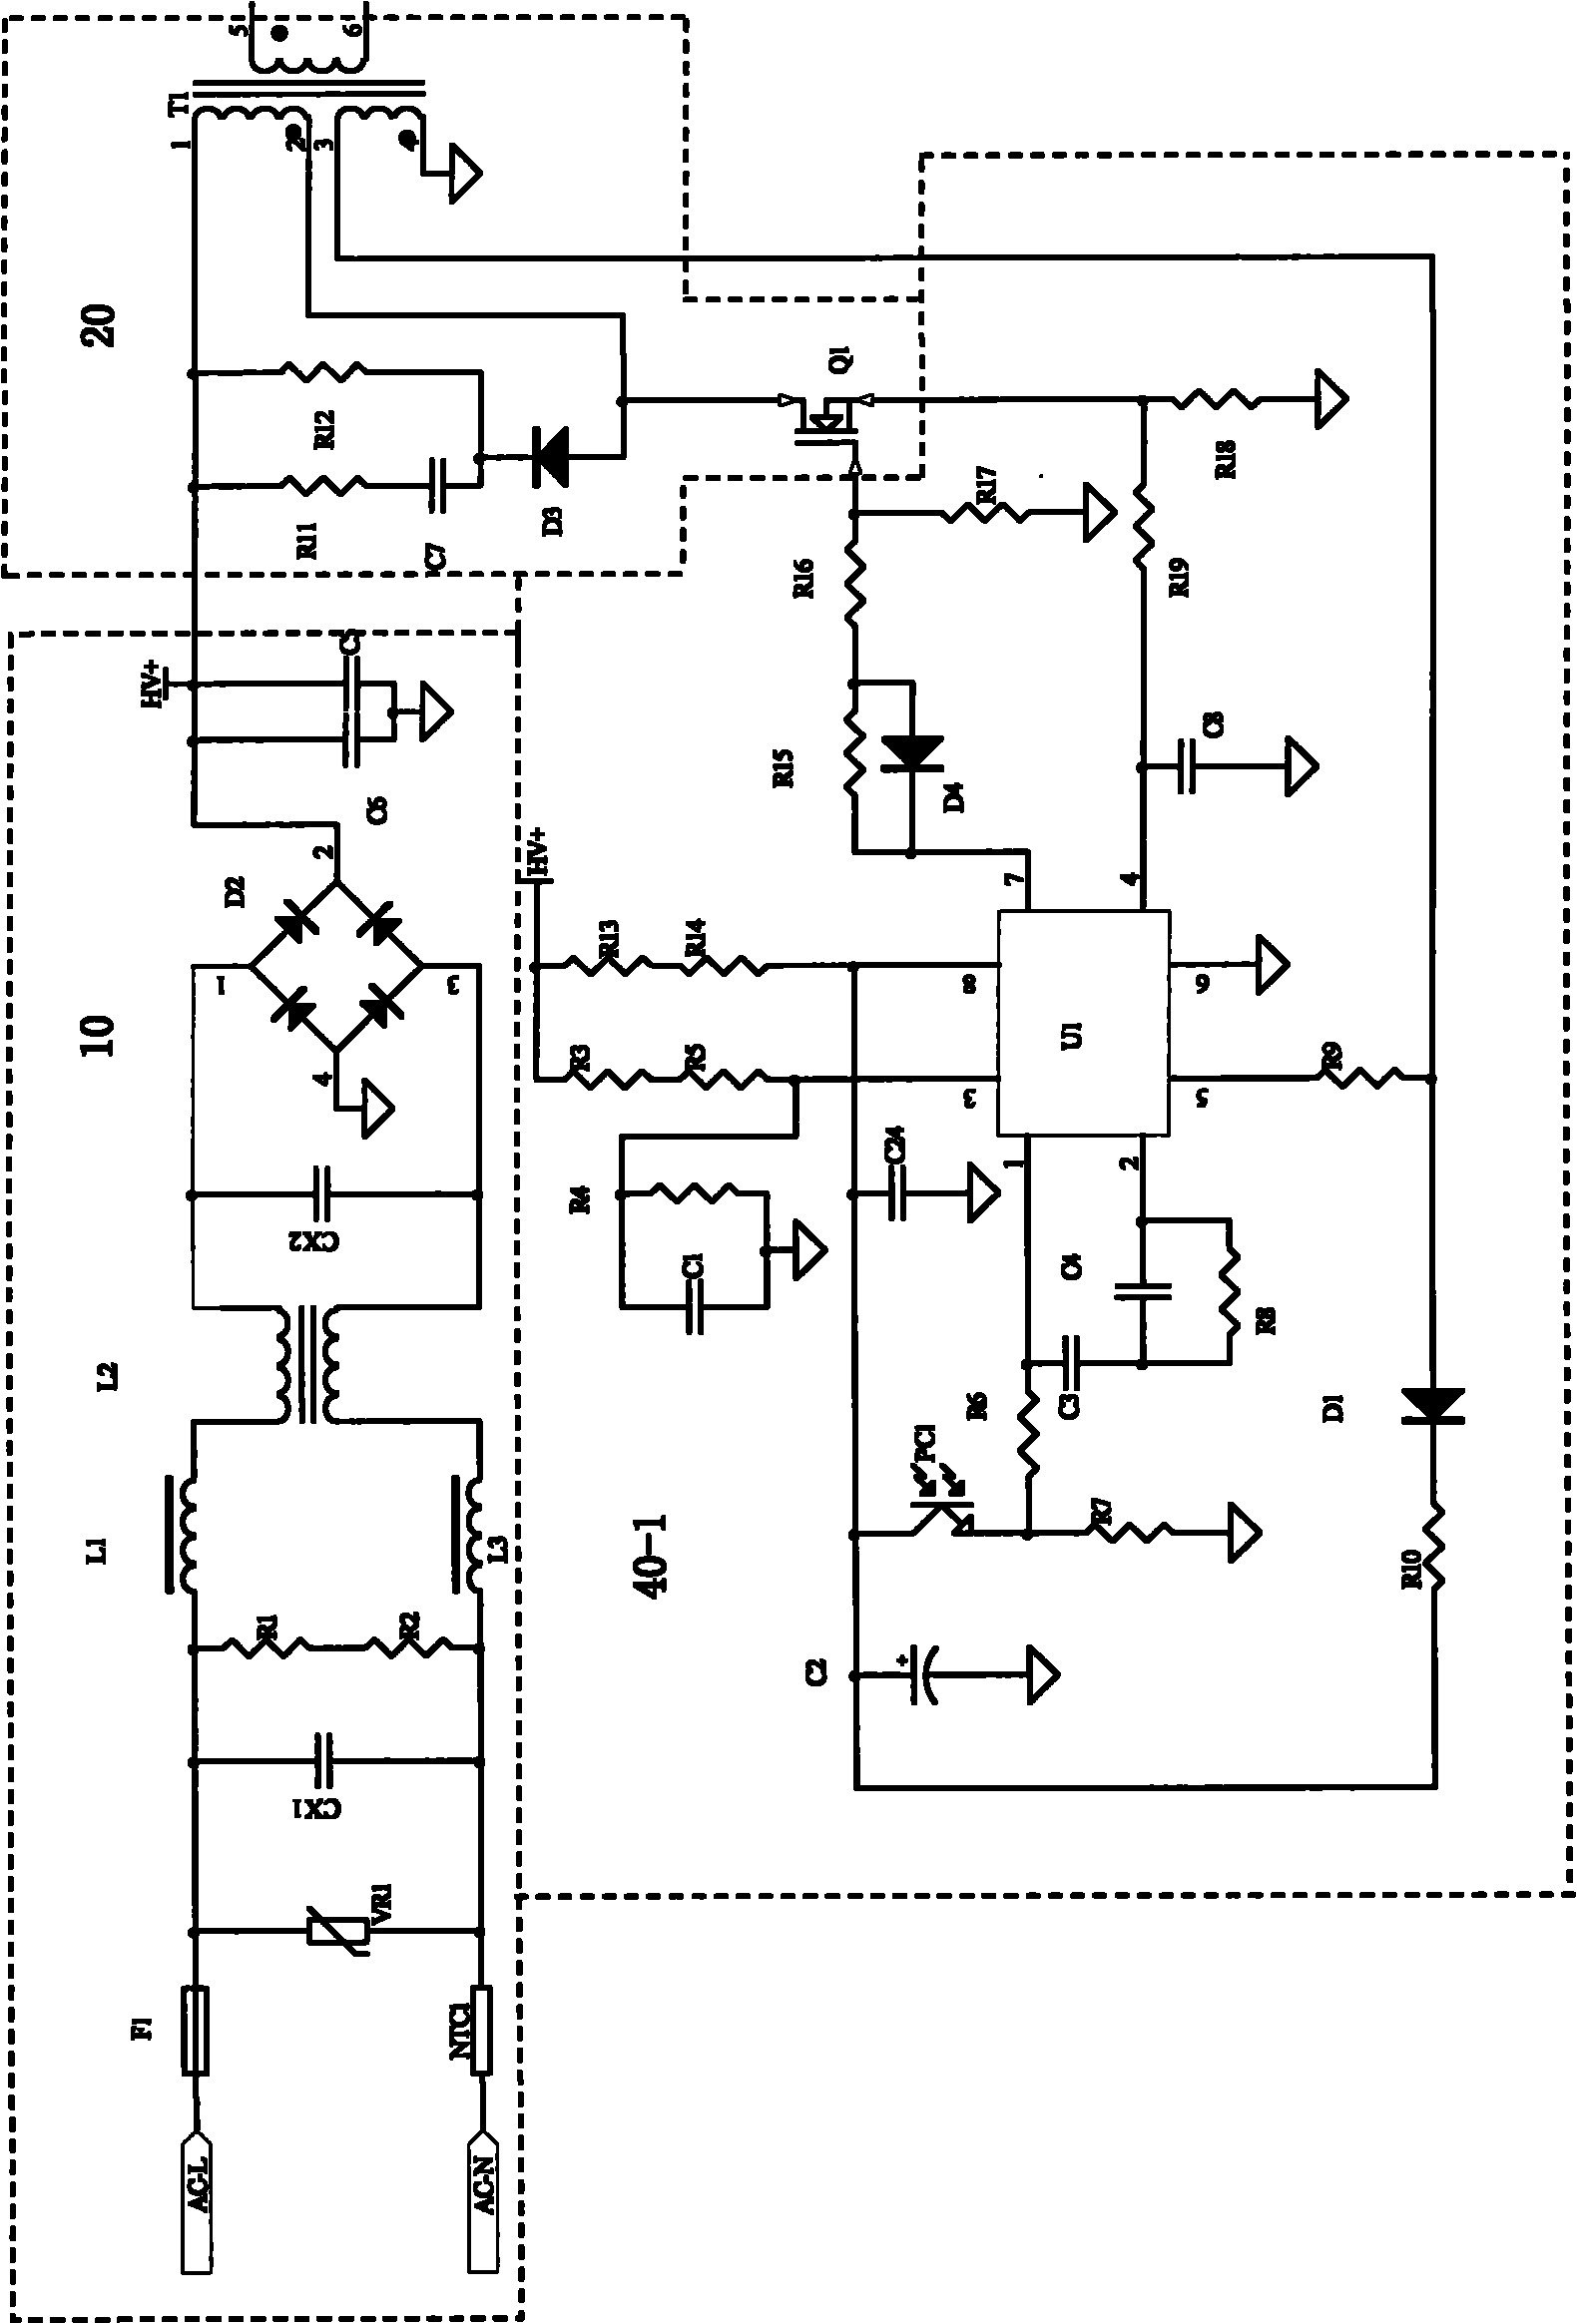 LED power driving circuit